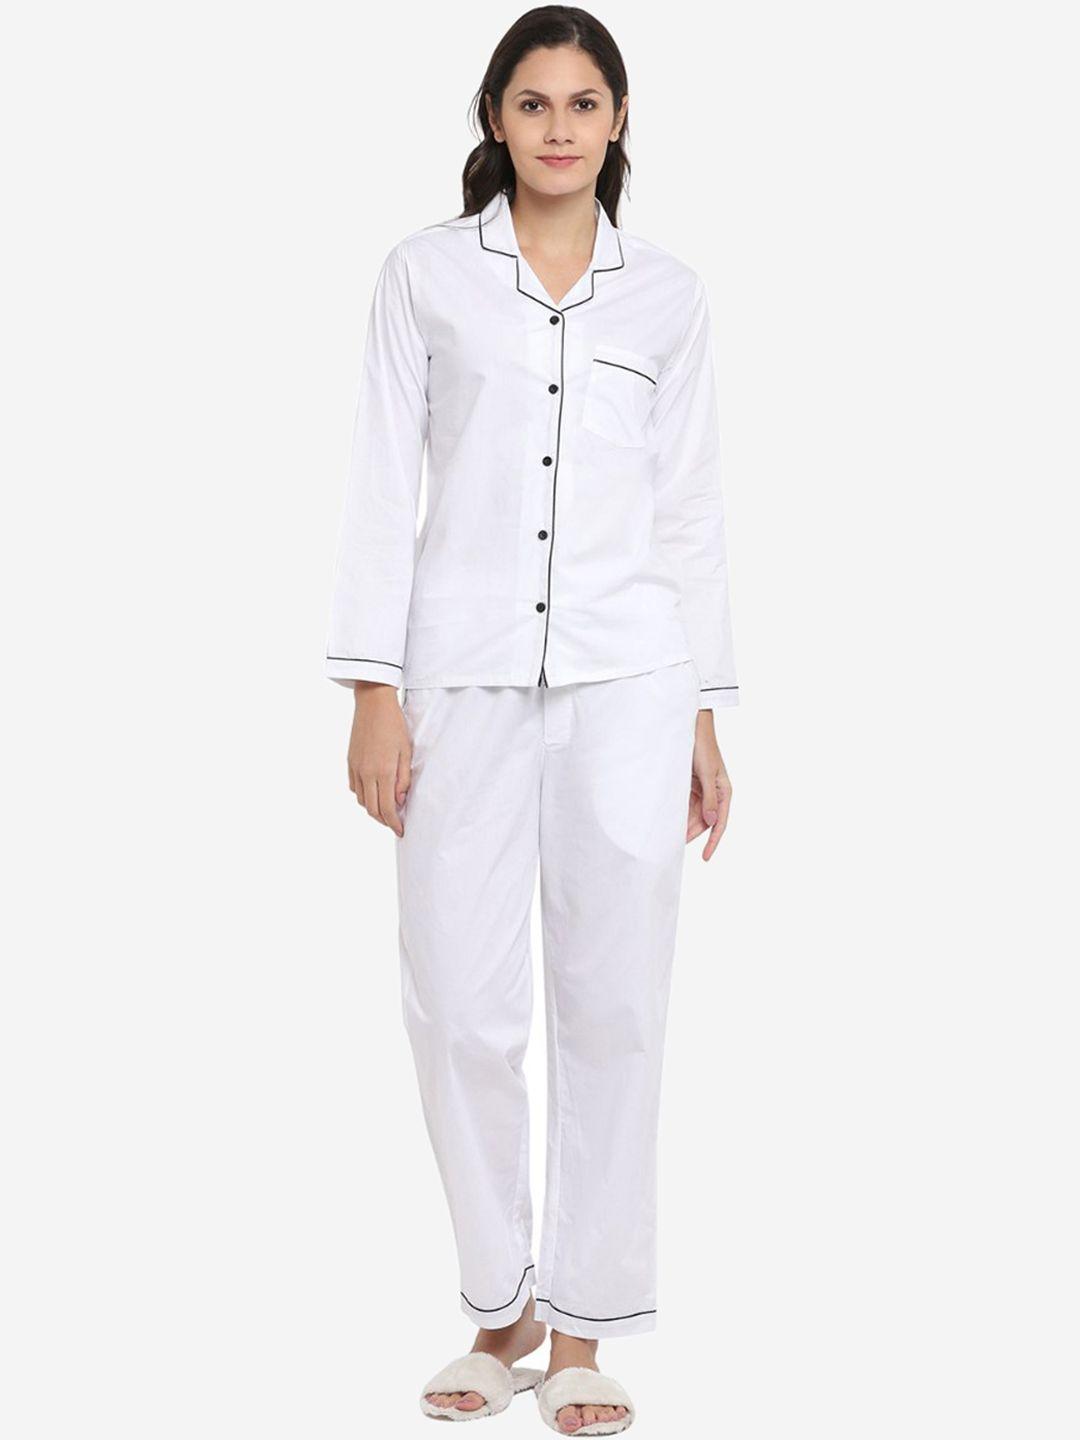 shopbloom-women-white-night-suit